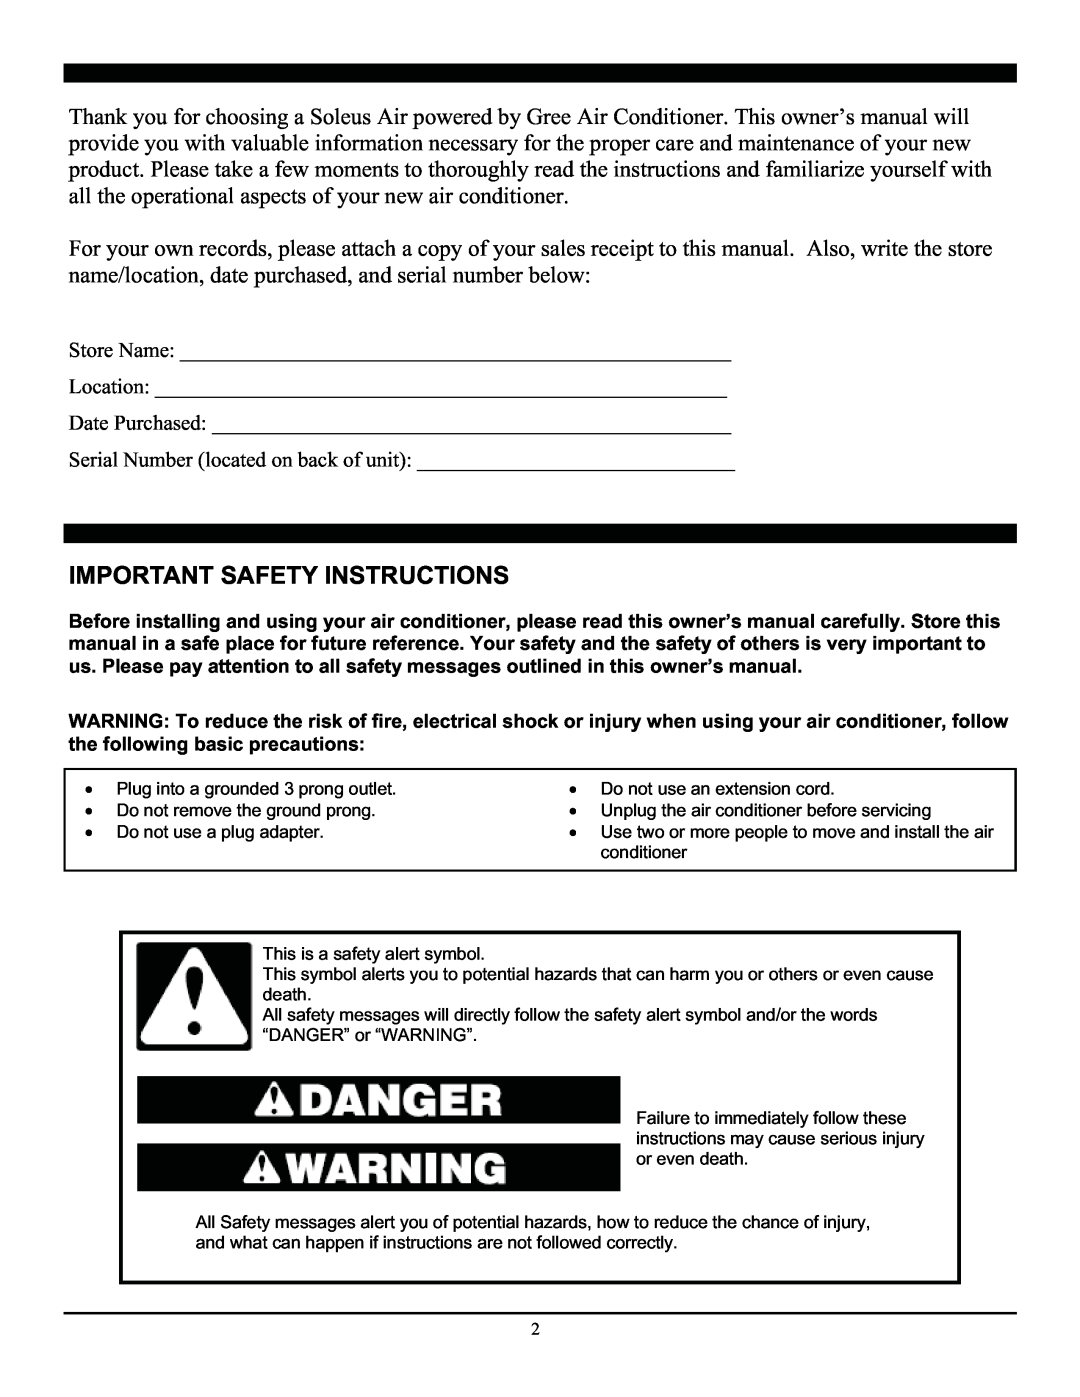 Soleus Air SG-TTW-12HC manual Important Safety Instructions 